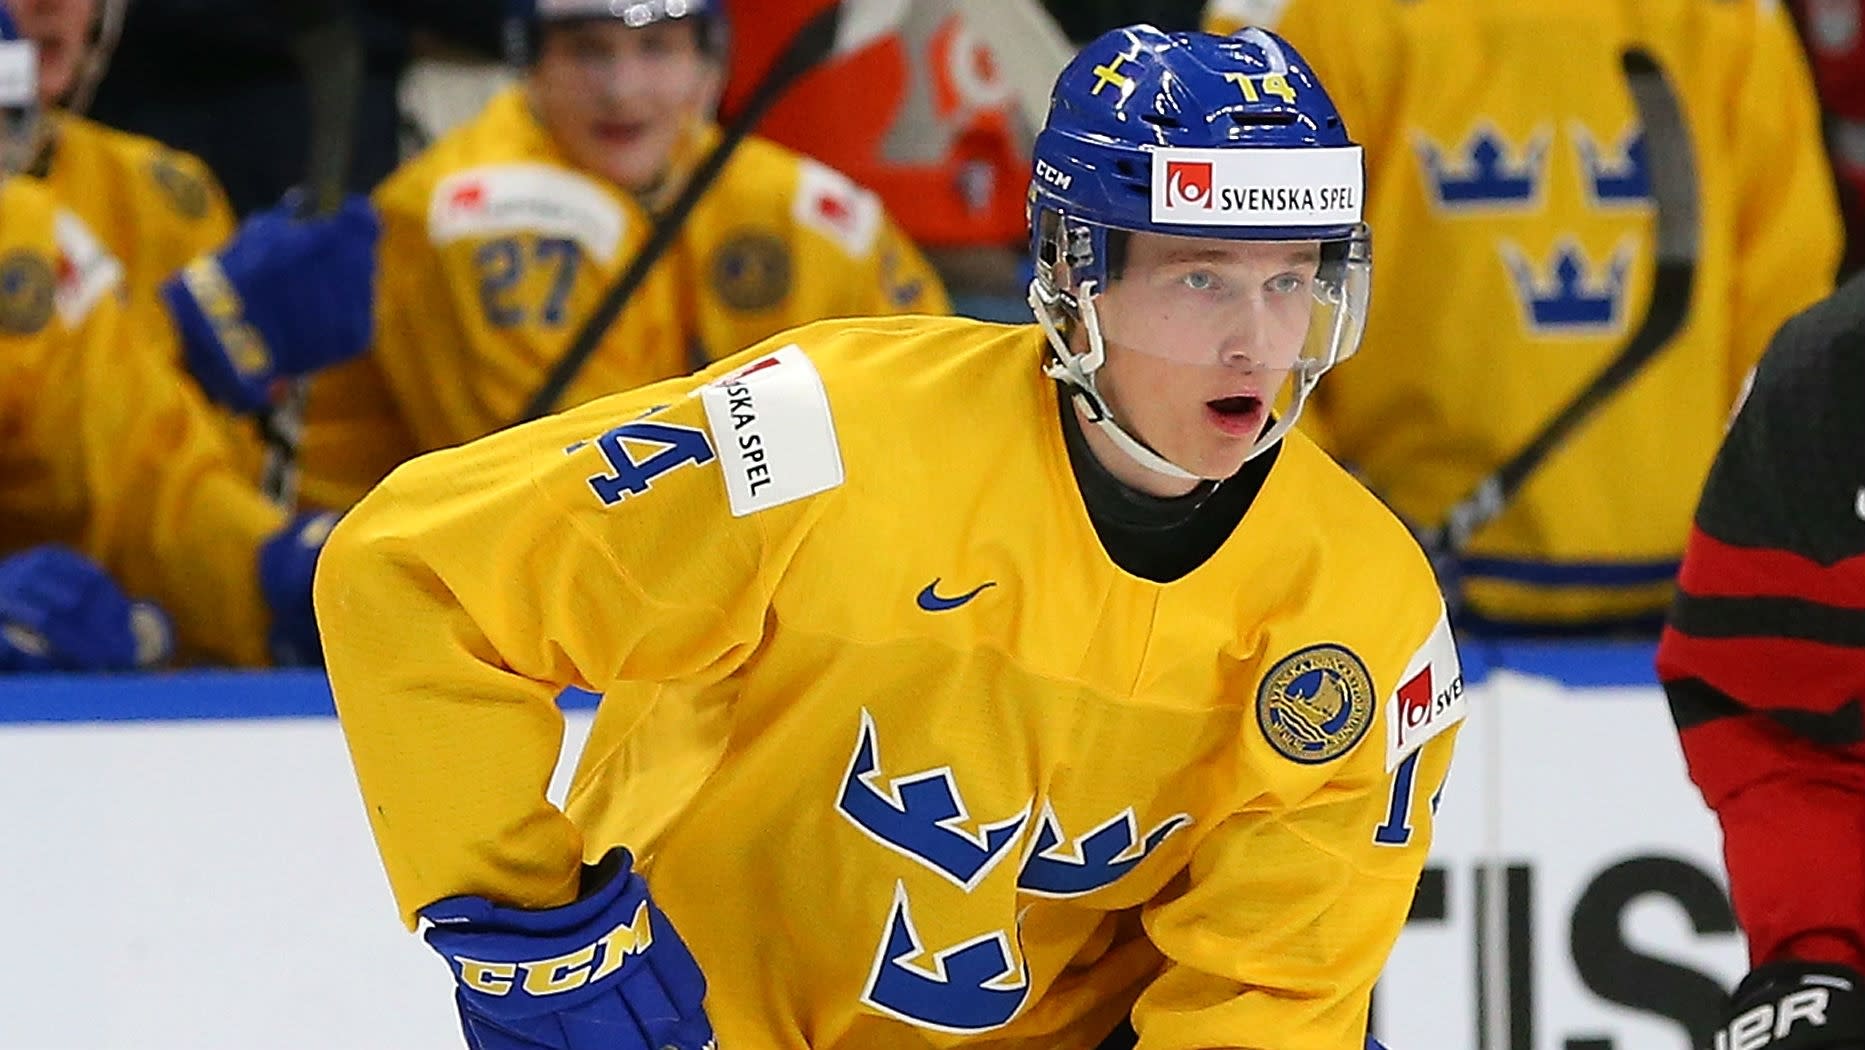 Swedish NHL players raise concerns by 